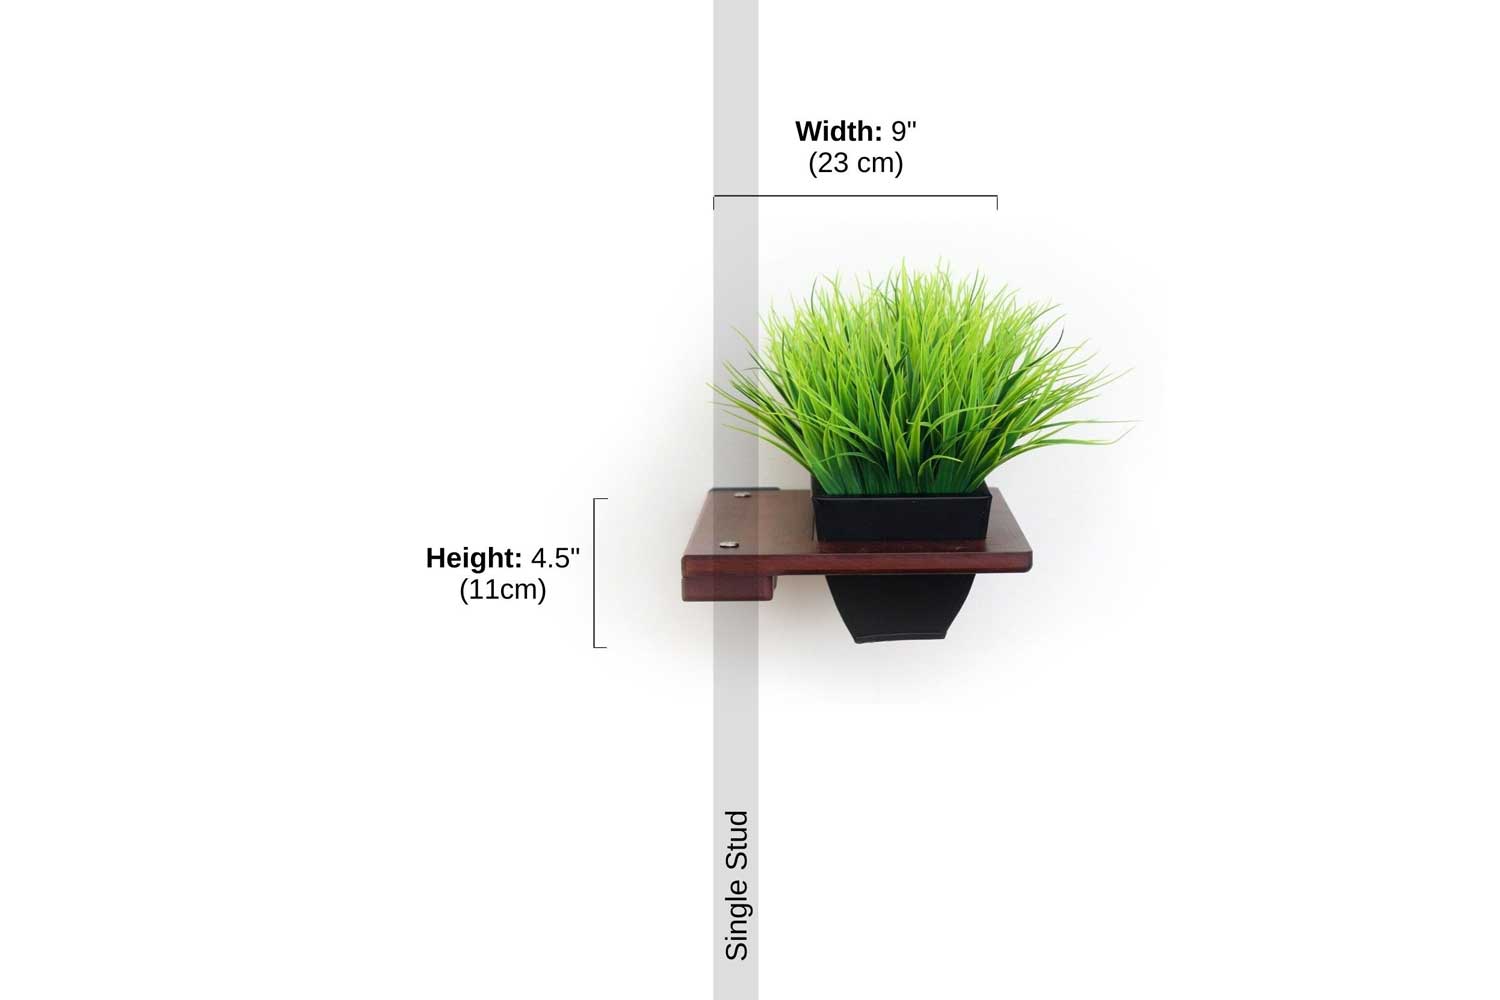 Measurements of 9-Inch Planter Shelf